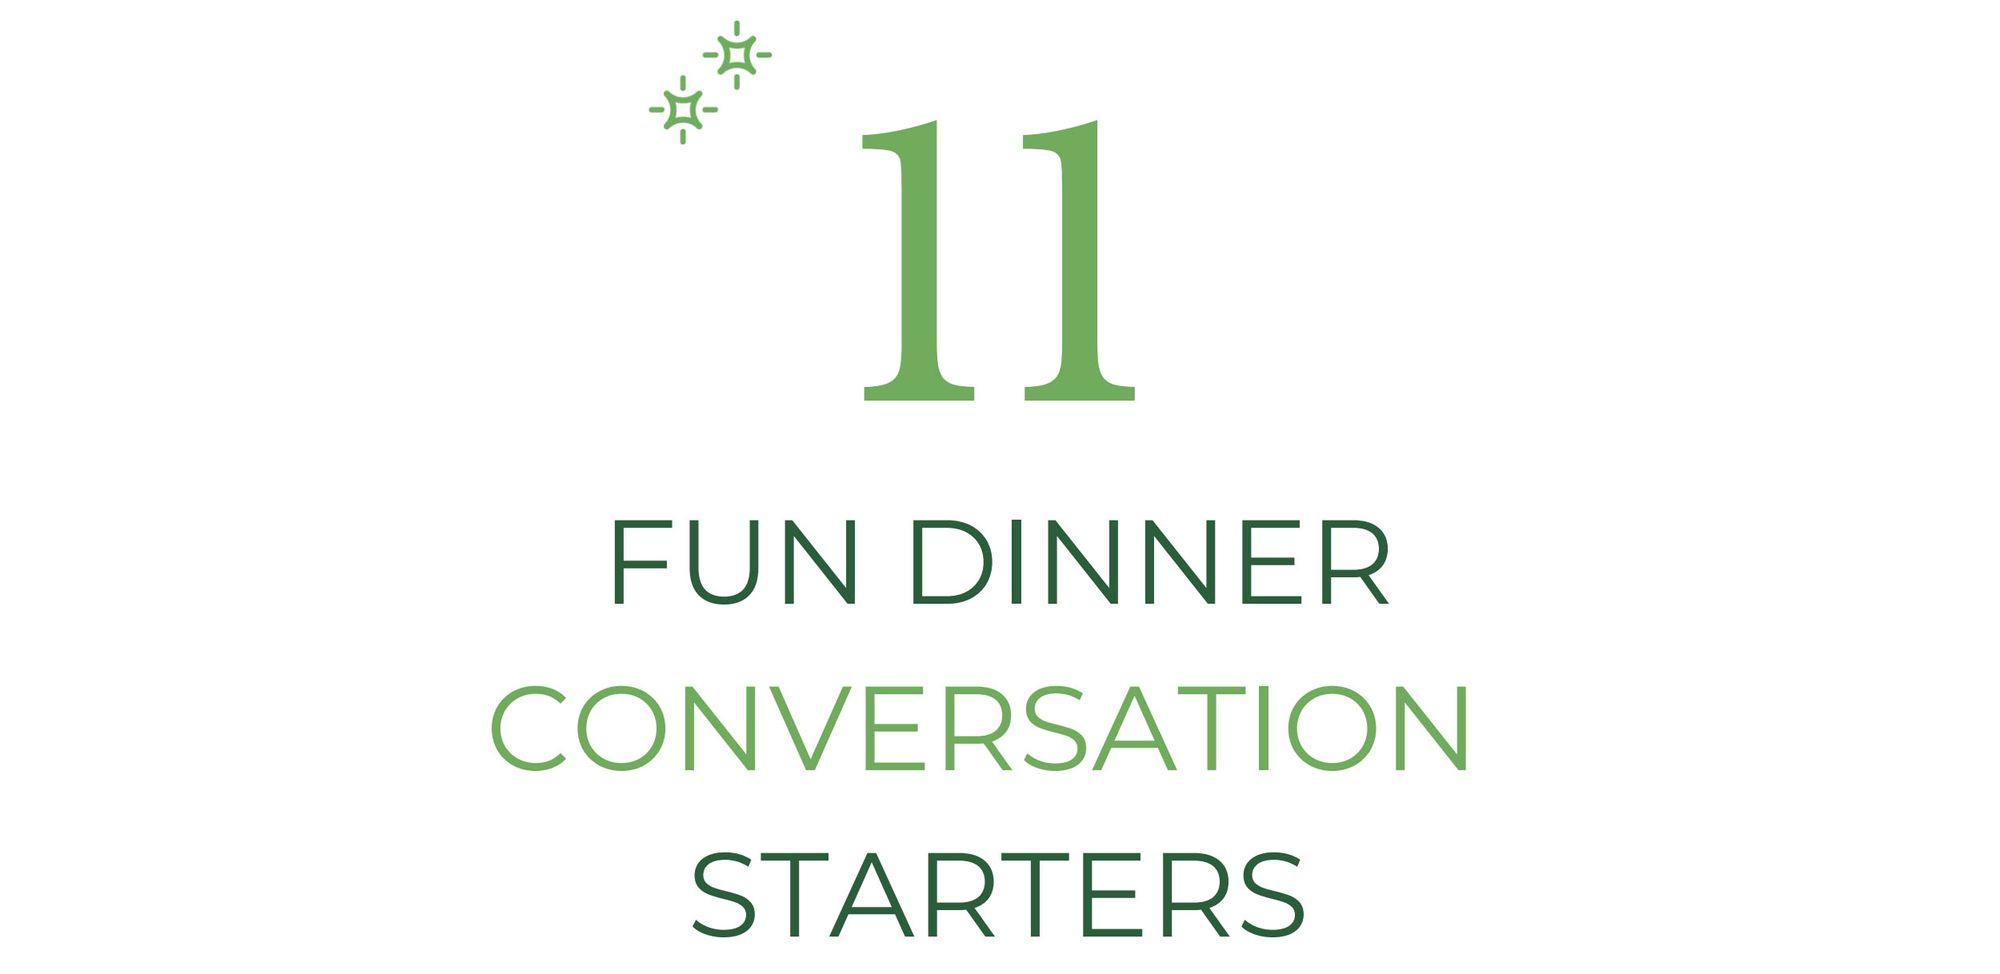 11 Fun Dinner Conversation Starters